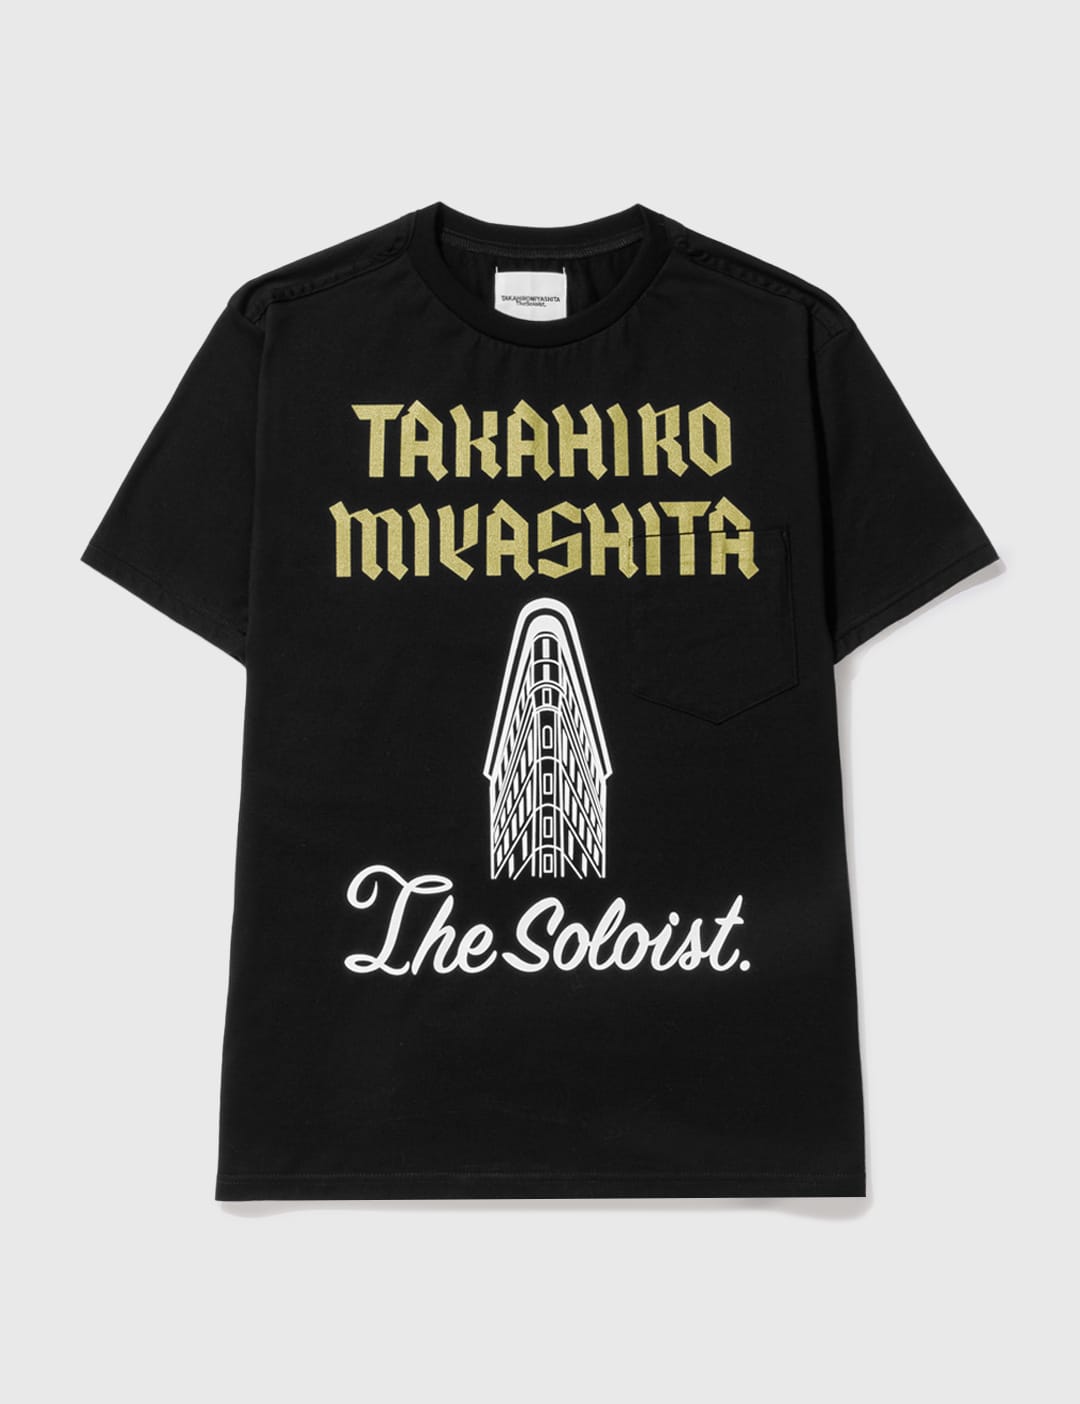 Takahiromiyashita Thesoloist - ザ ソロイスト Tシャツ | HBX -  ハイプビースト(Hypebeast)が厳選したグローバルファッション&ライフスタイル